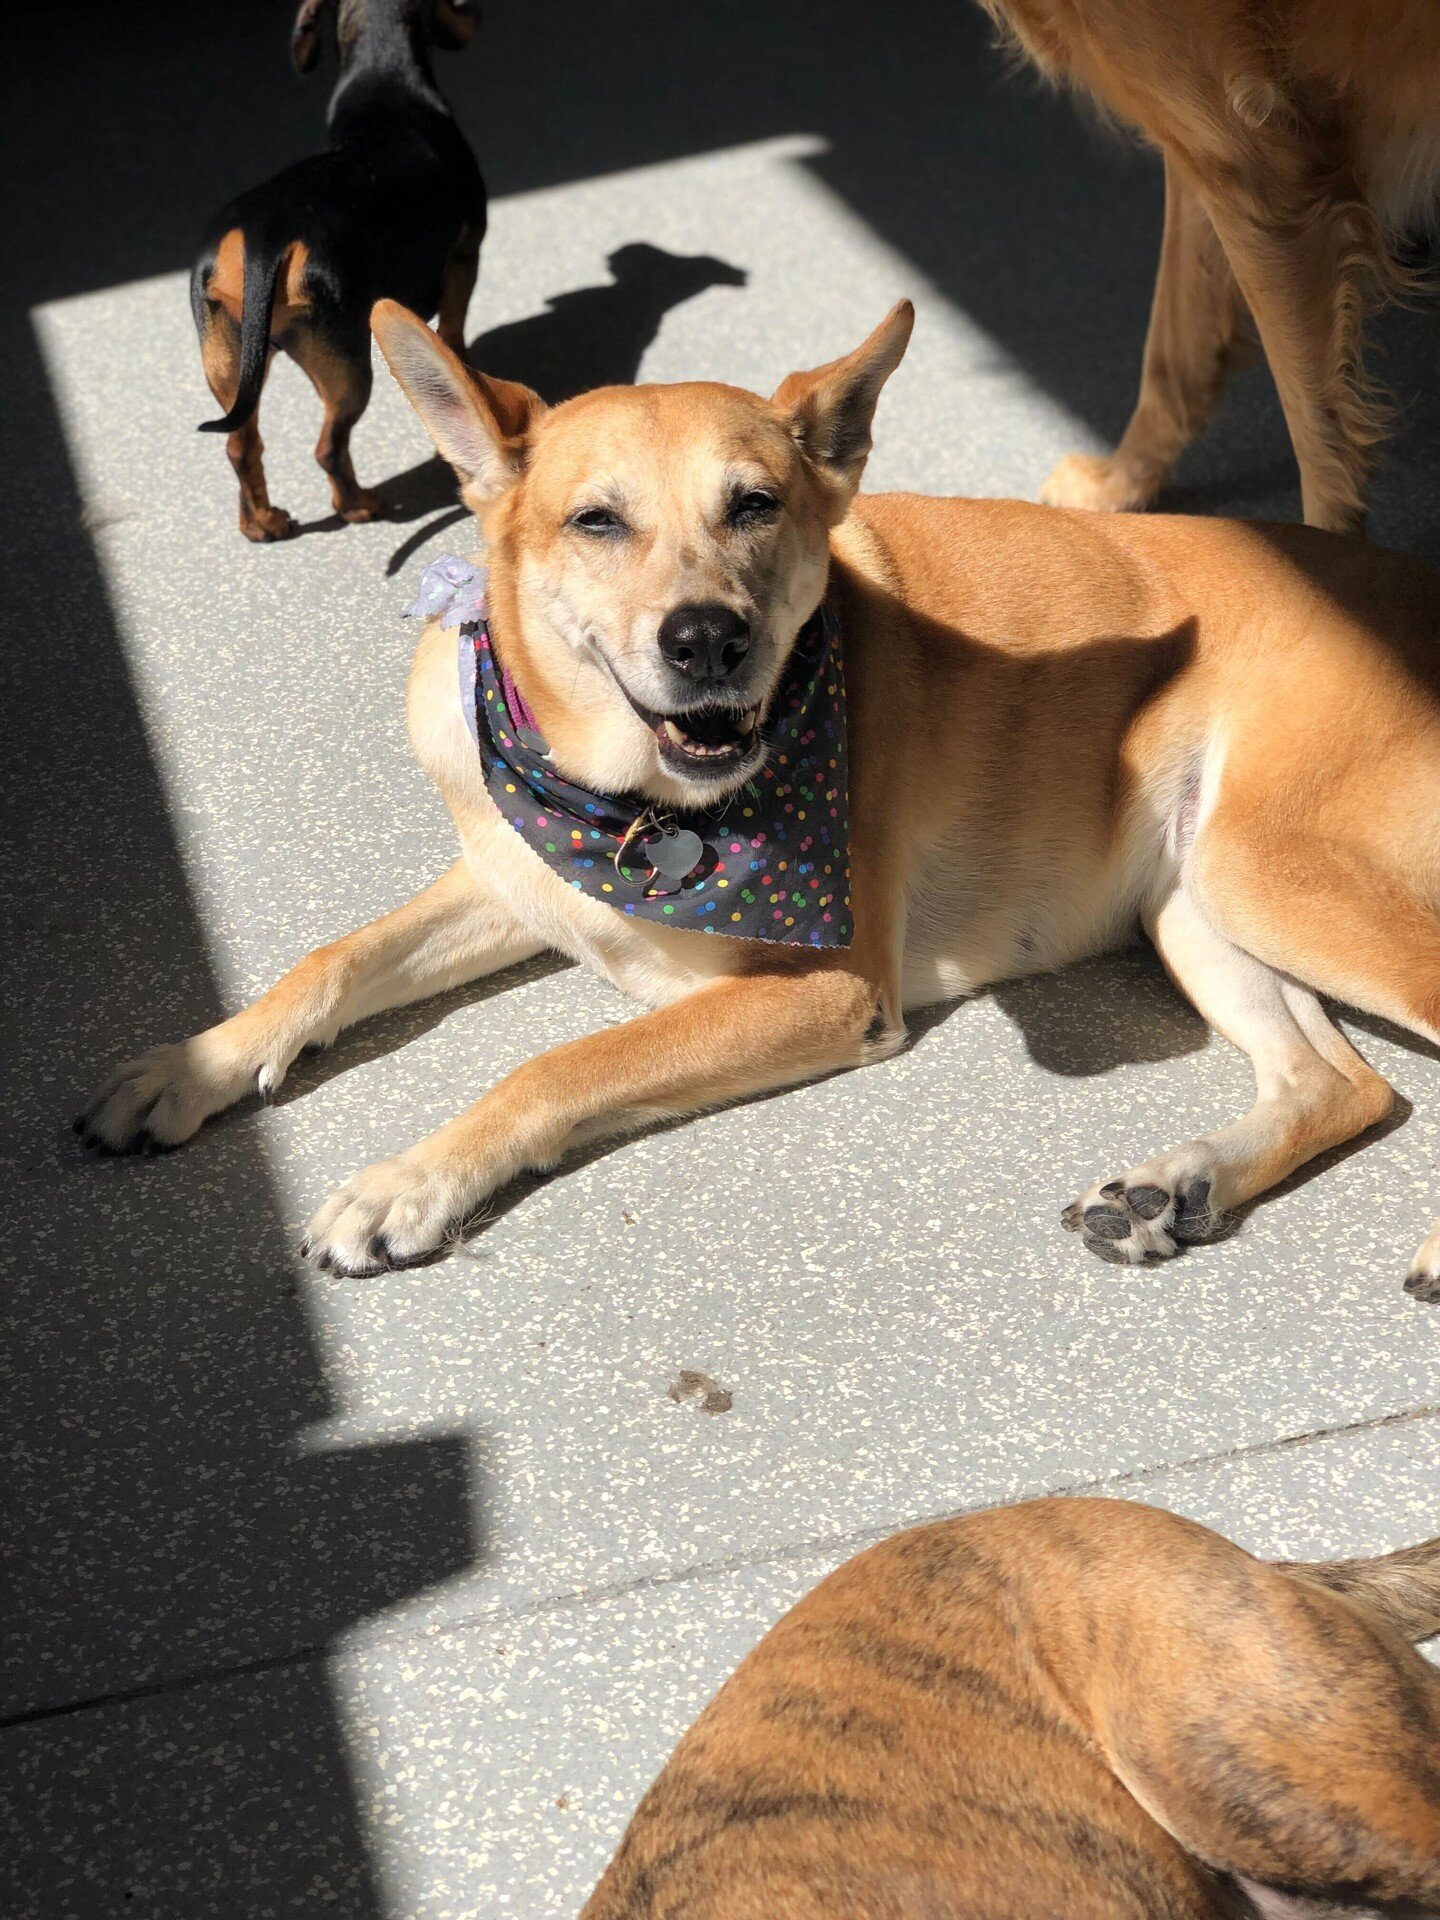 When pups find the sunny spot in daycare!

#sunnydays #dogslife #dogsofig #dogsofinsta #doglife #doglovers #dogmom #dogsinlove #dogdadsofinstagram #doglove #dogsofcalifornia #dogsonthebeach #dogsatthebeach #dogspa #dogtrainers